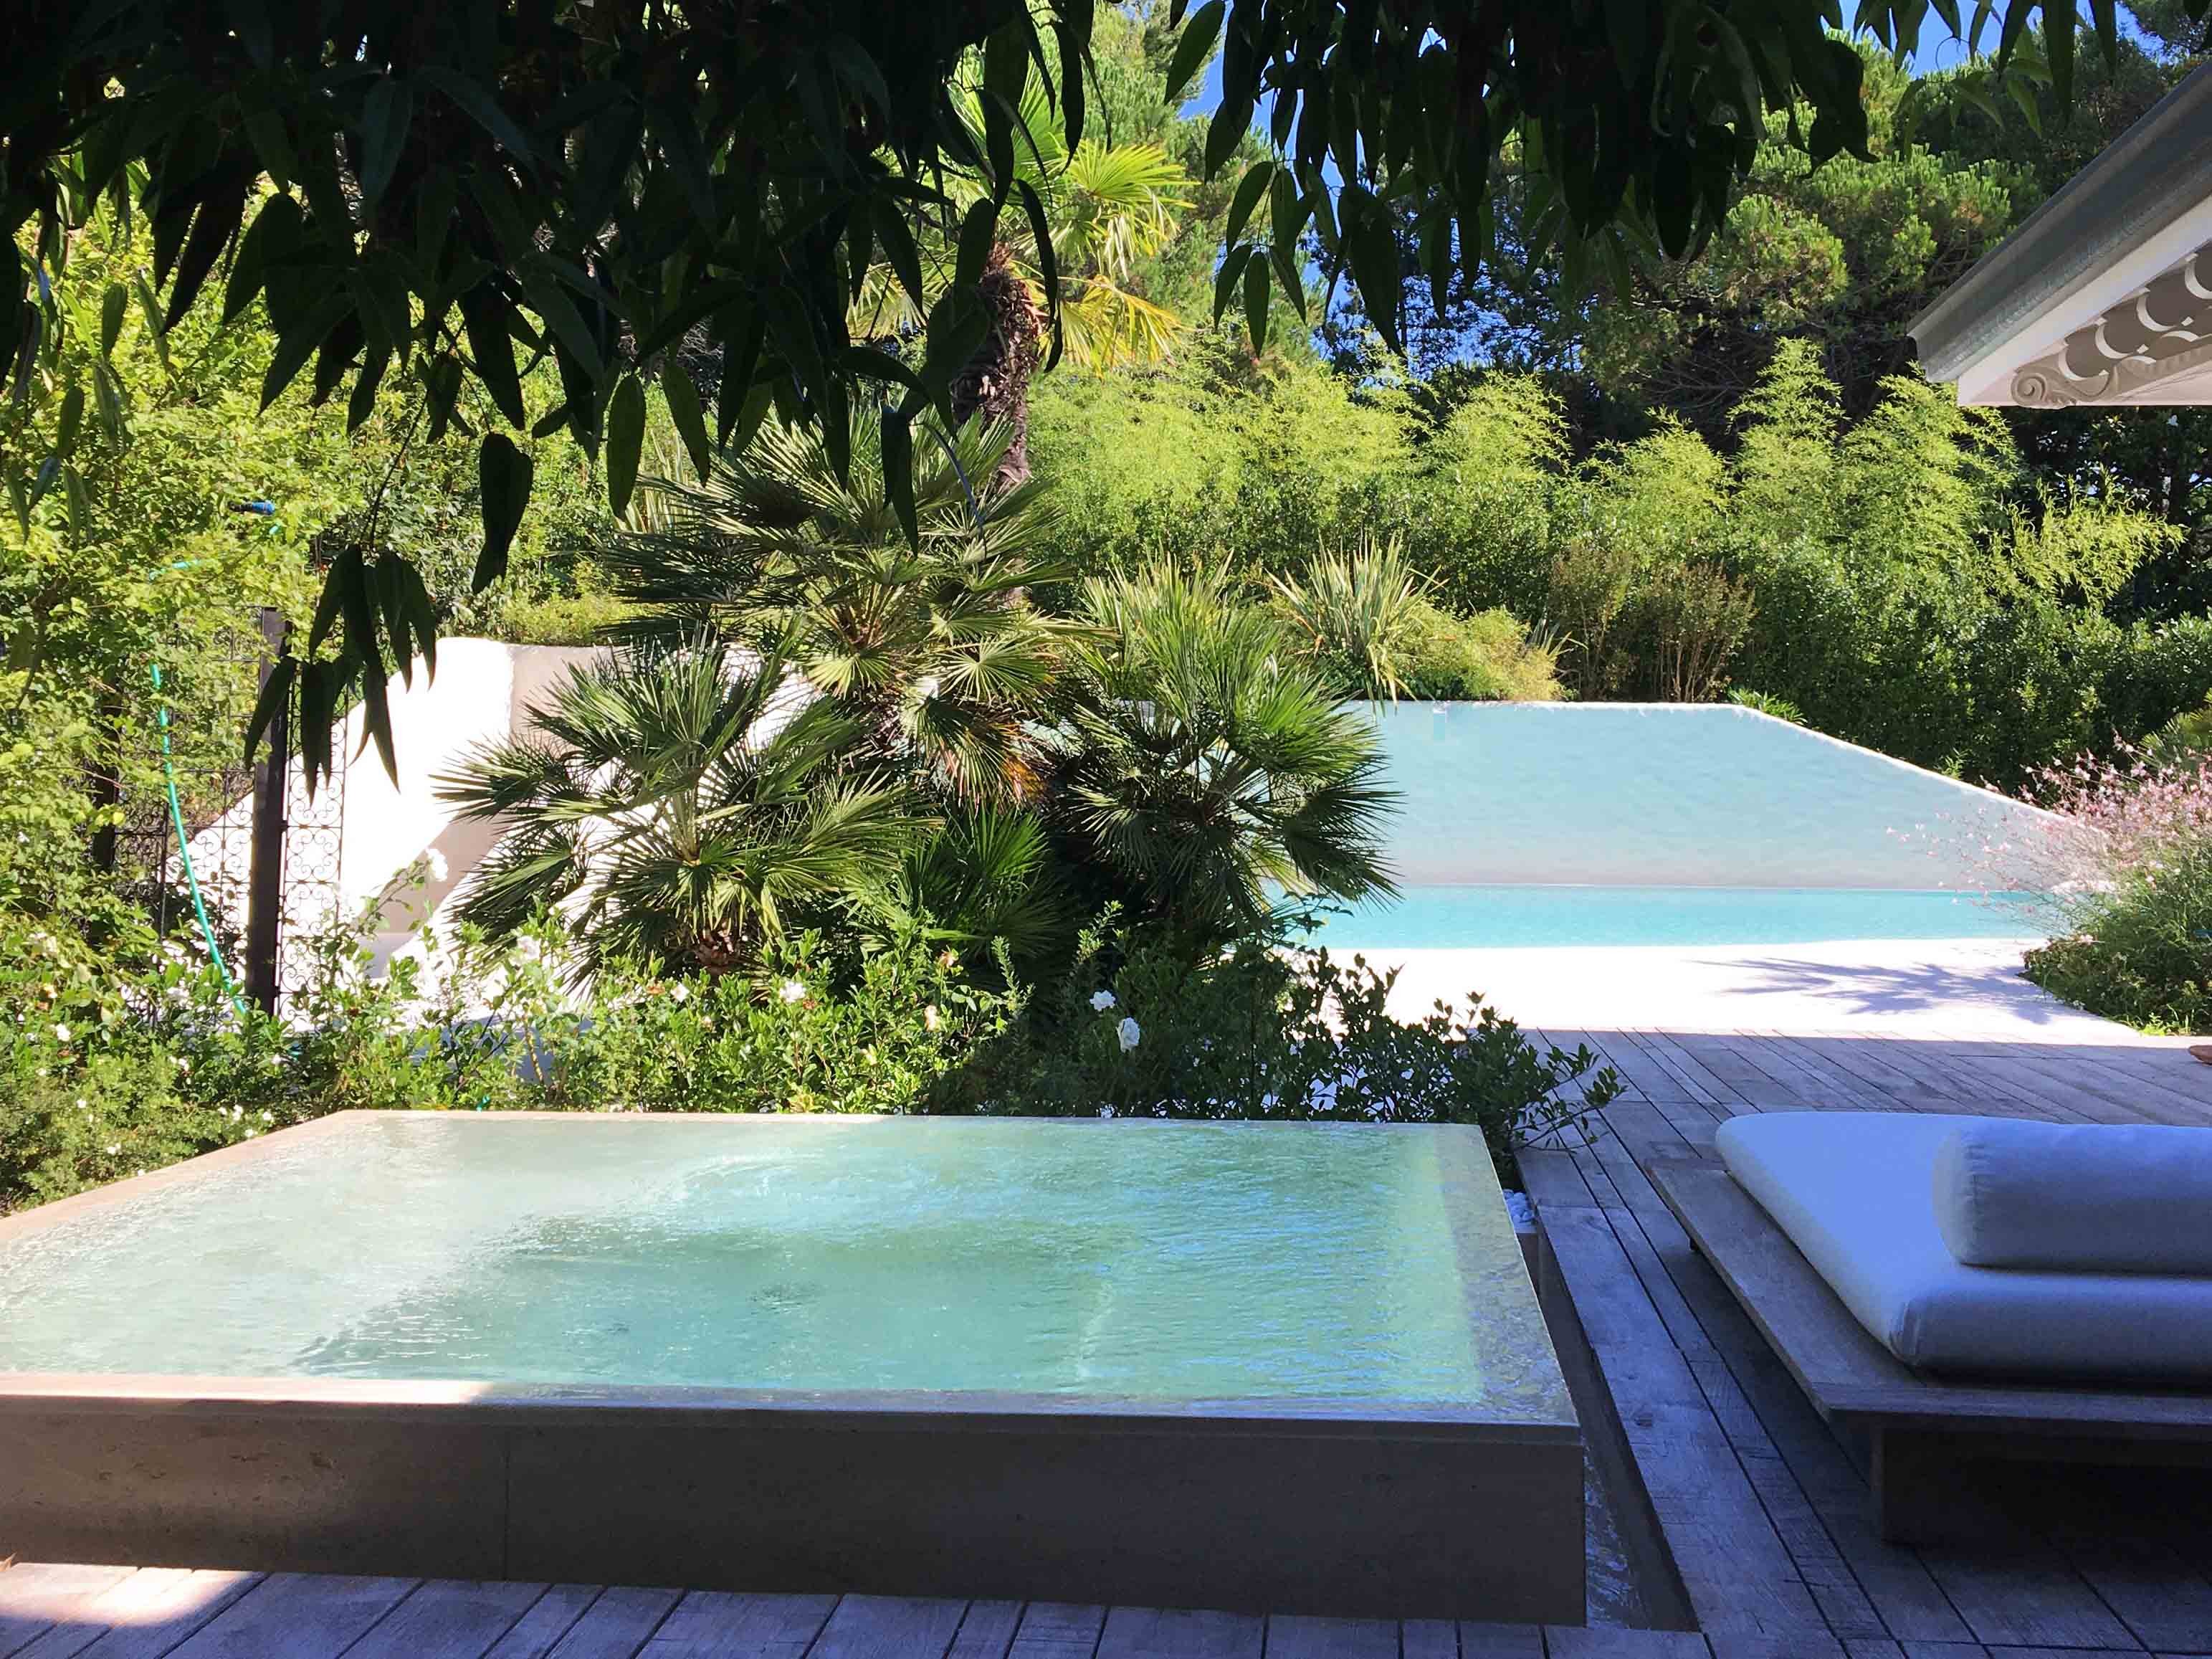 Quiet summer residence on the Ligurian coast - Gardens